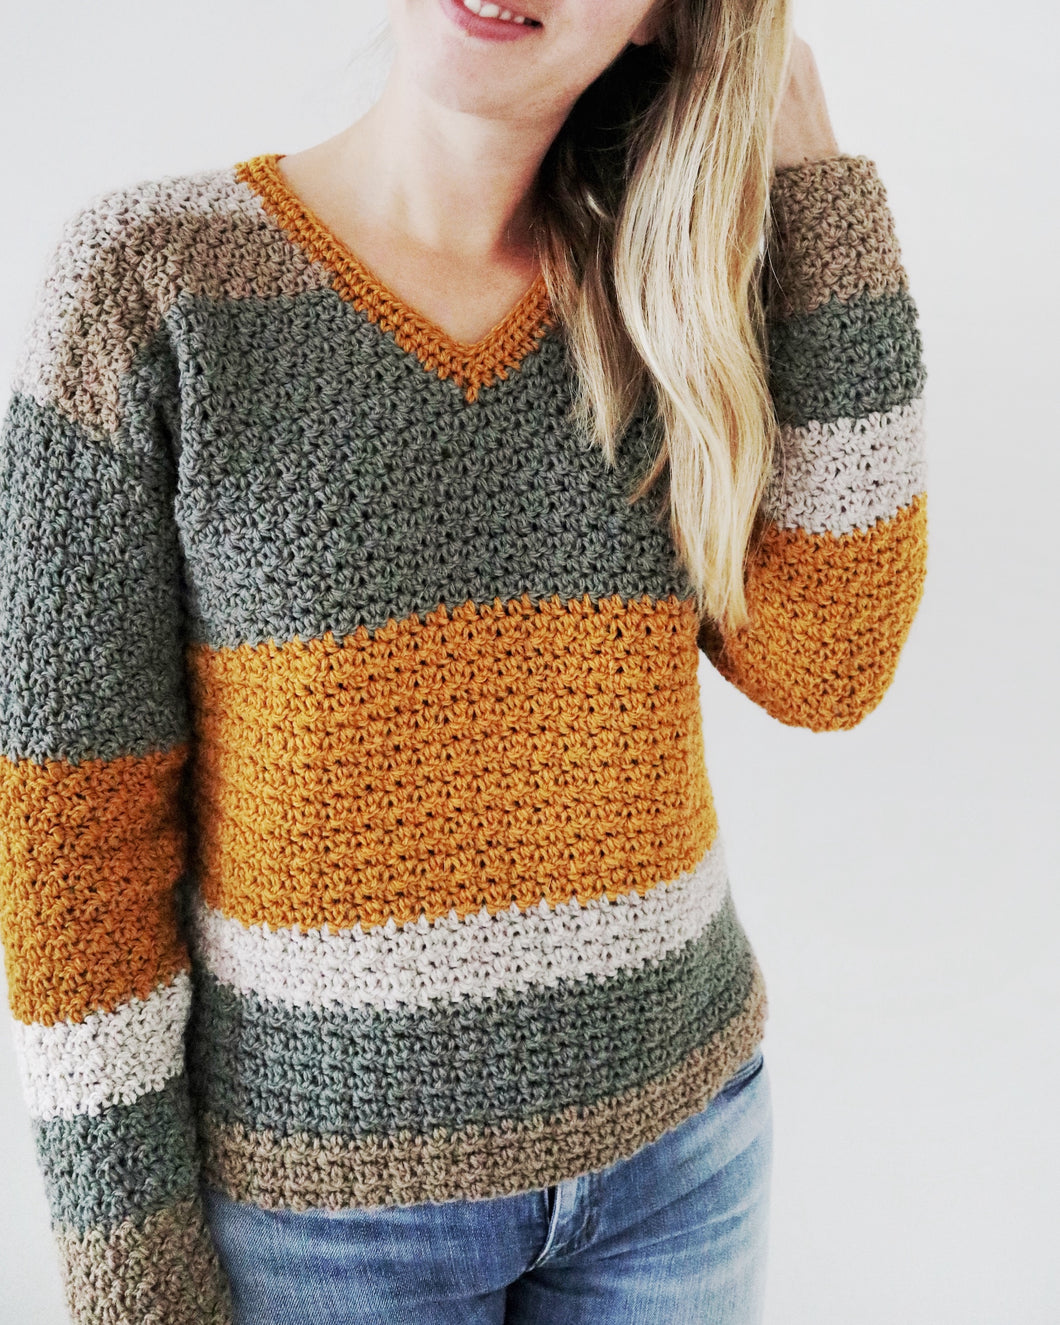 Sublime Sweater Crochet PDF Pattern by Emilia Johansson